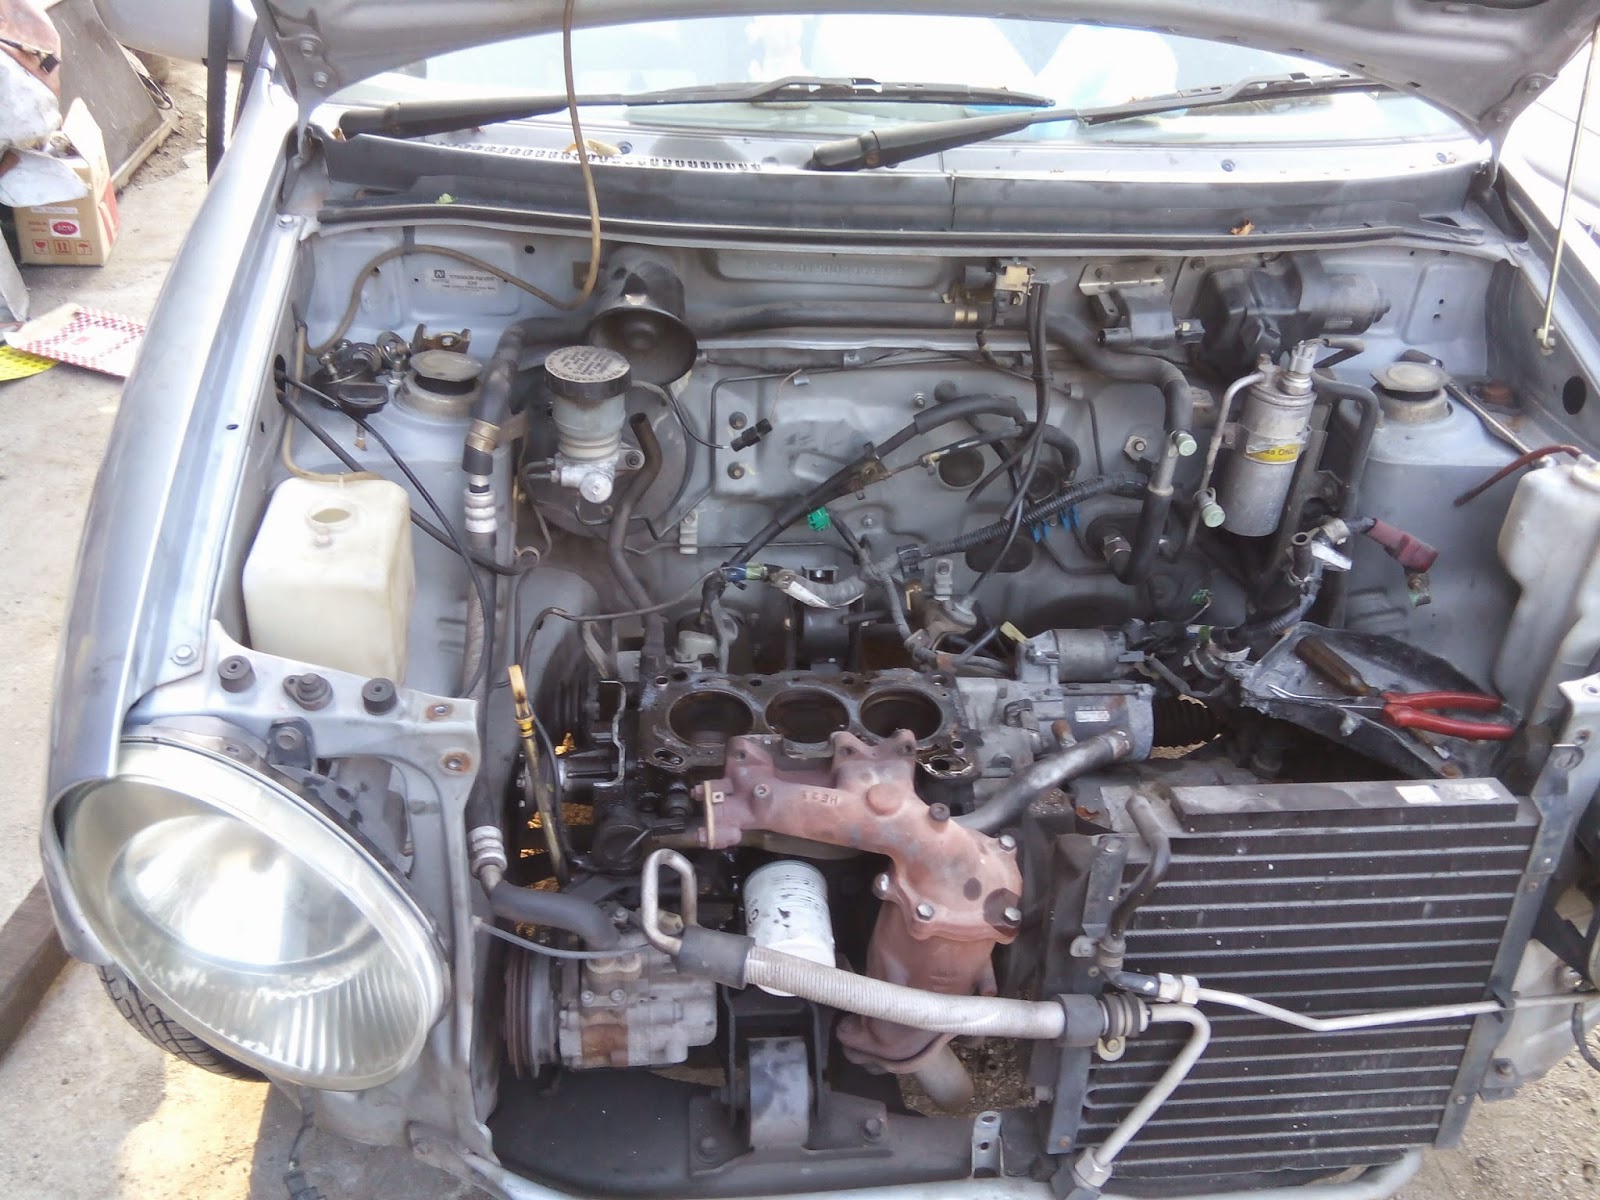 P44 Autoworks: Perodua Kancil 850